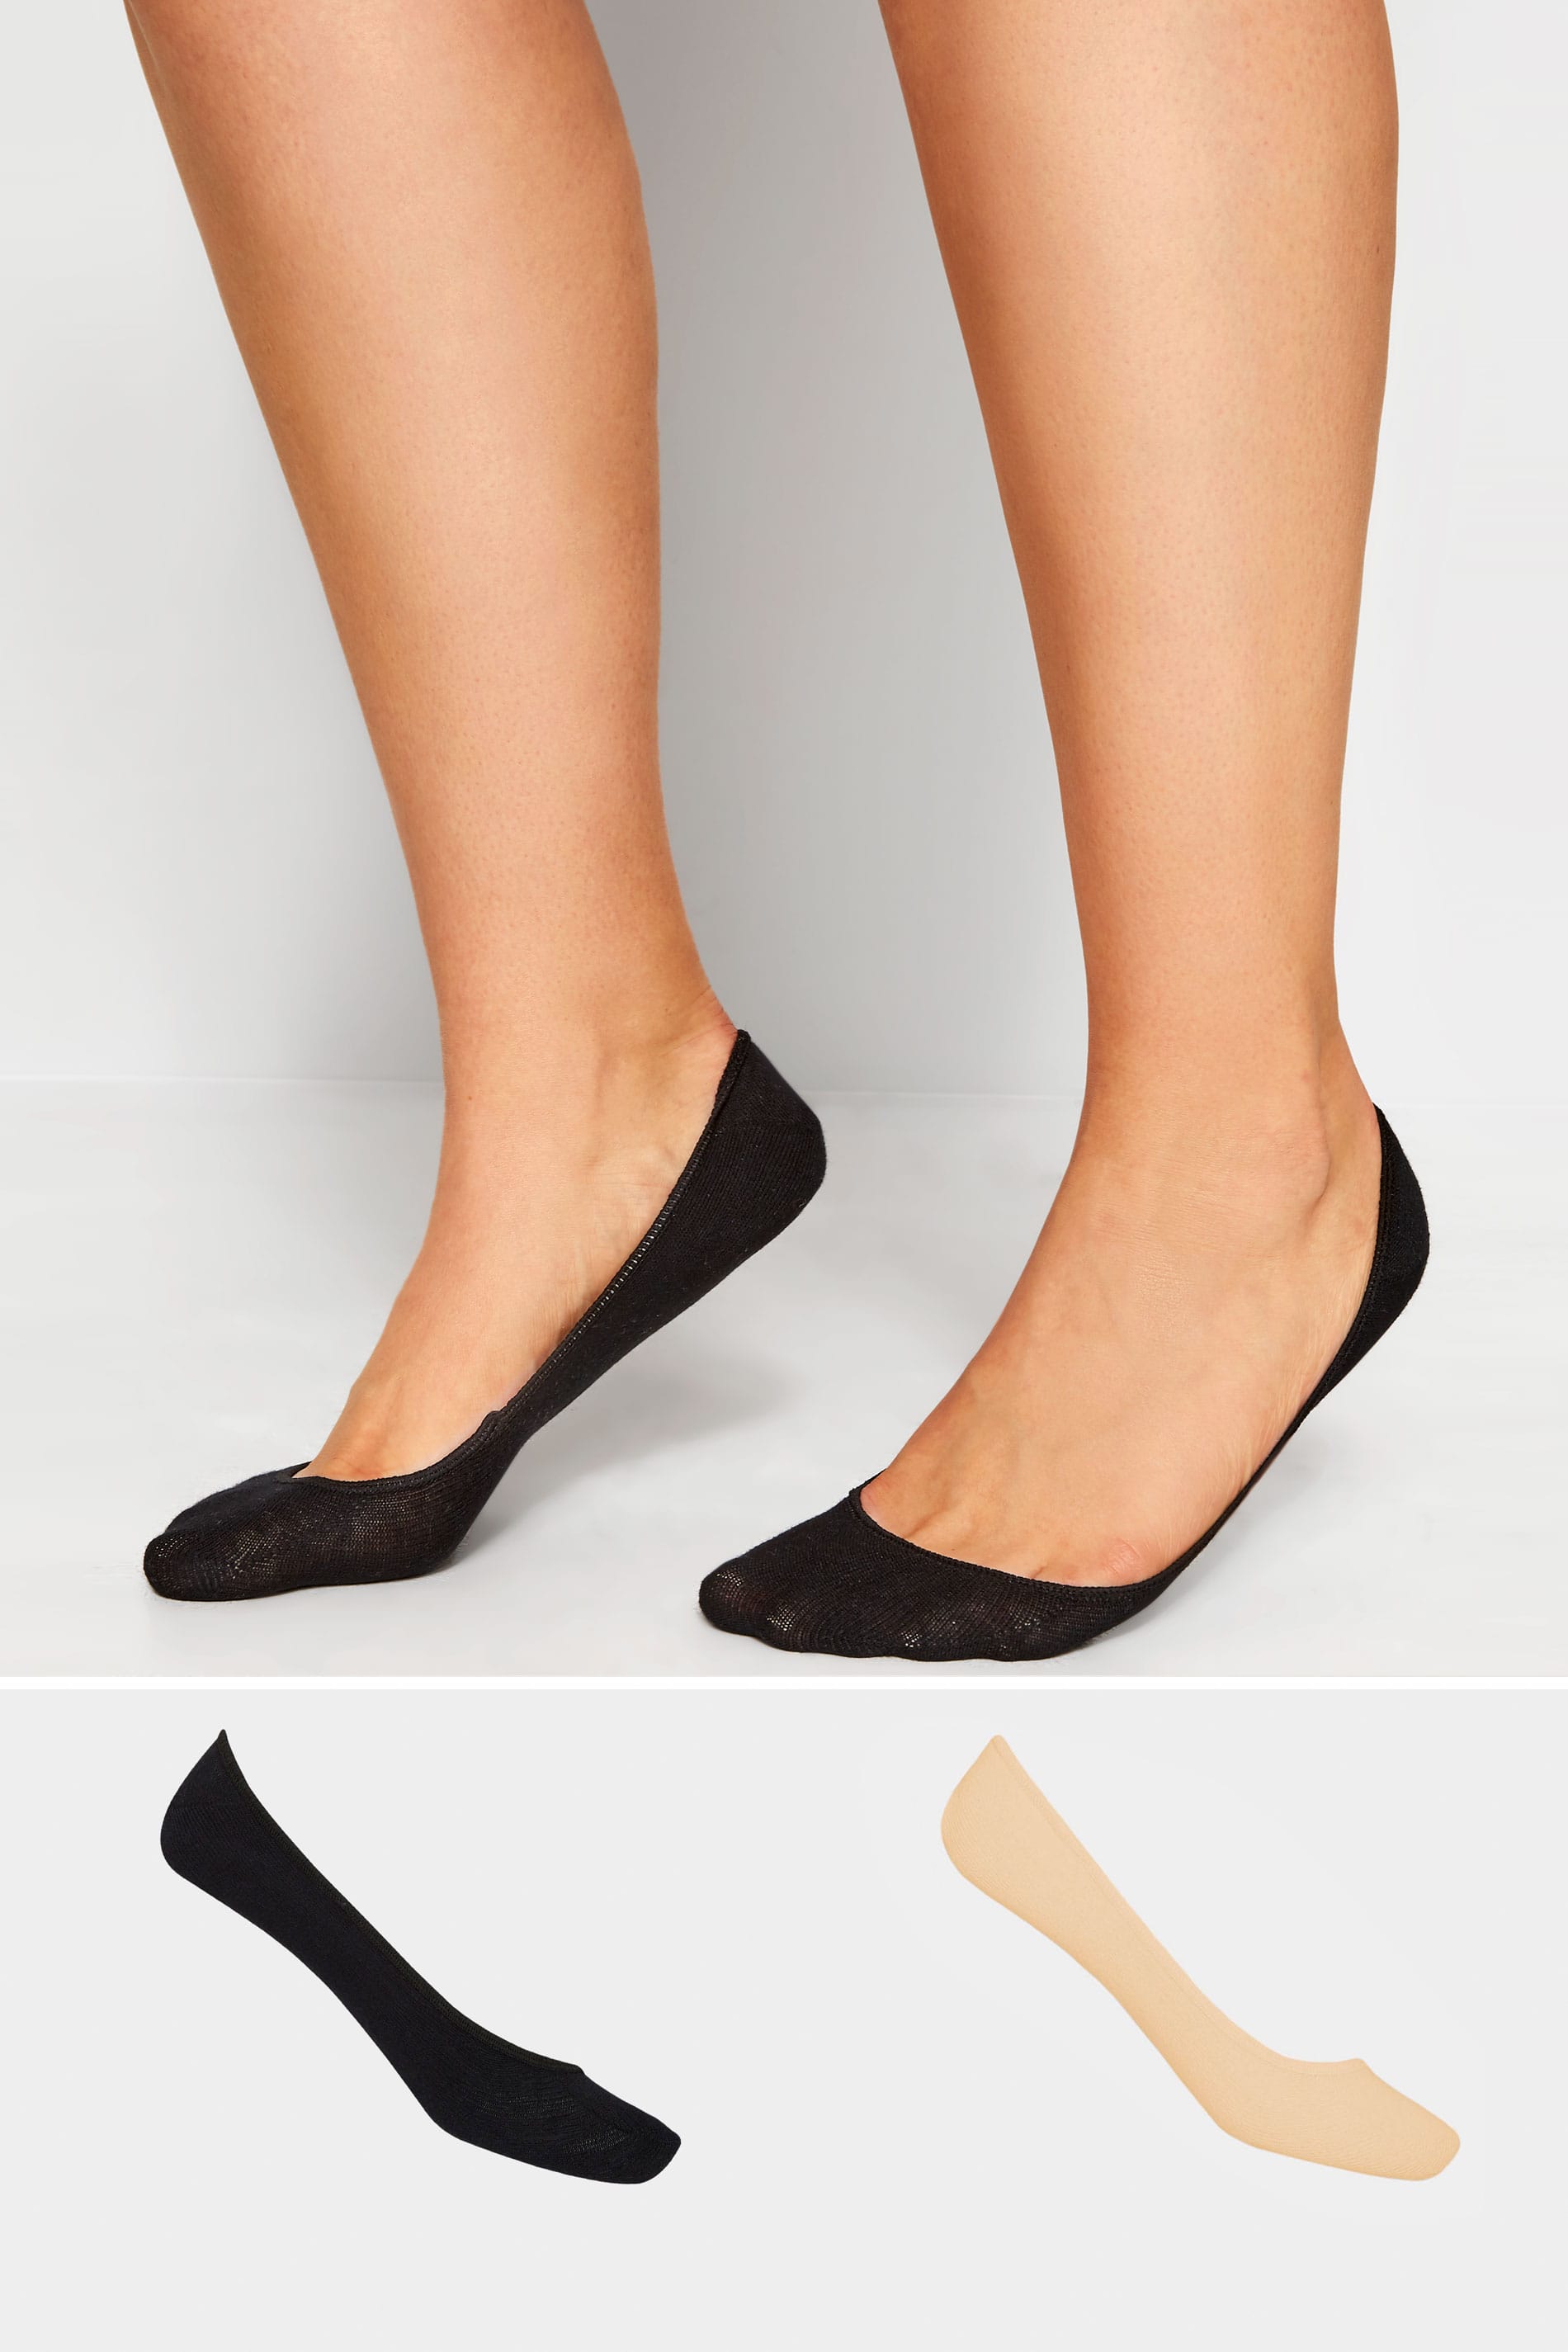 2 PACK Black & Nude Footsie Socks | Yours Clothing 1